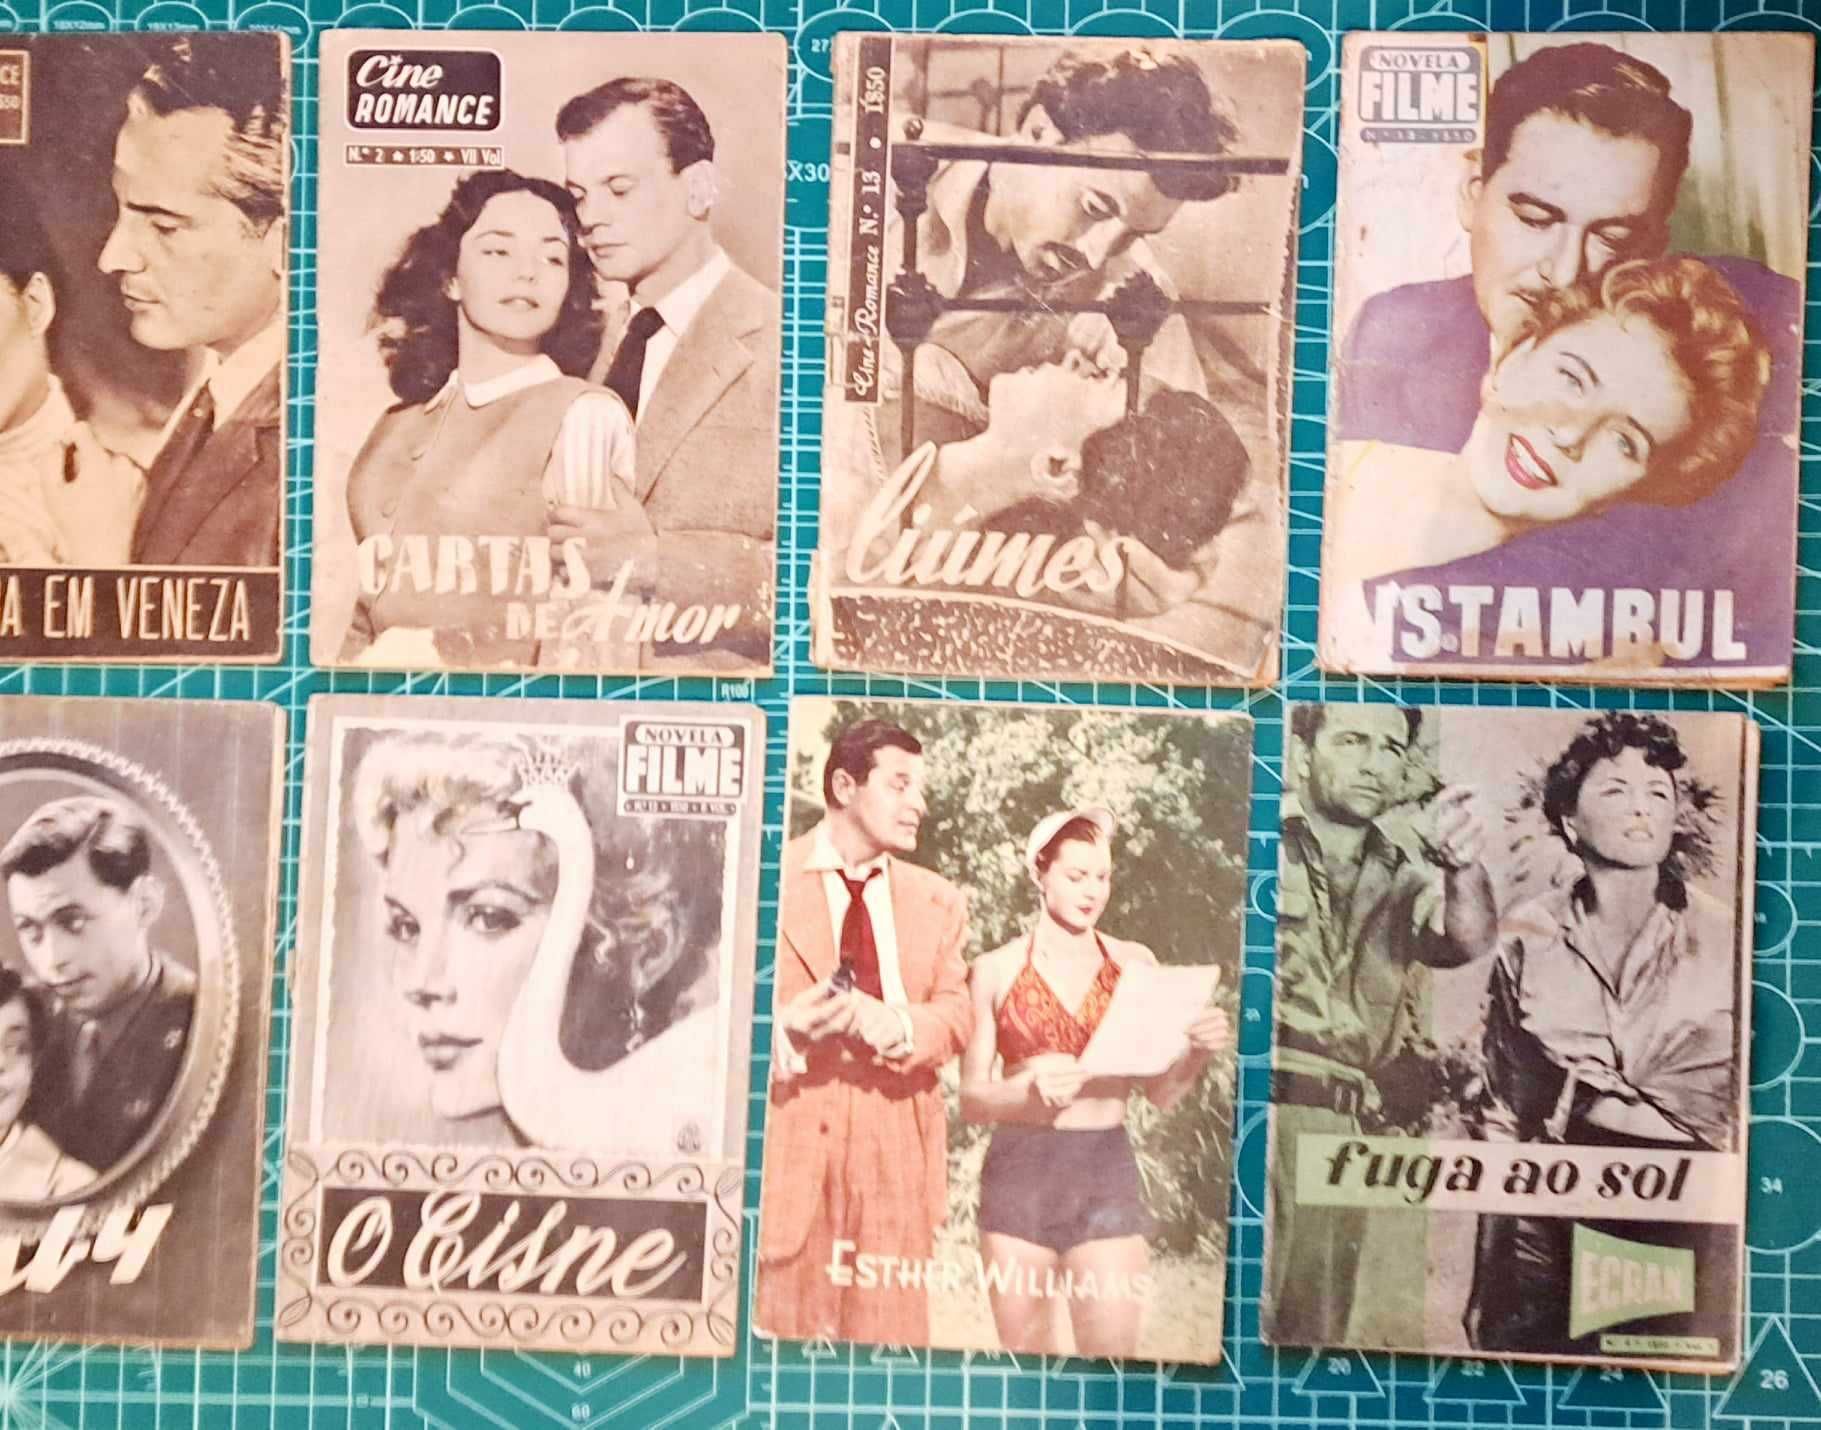 Lote de revistas antigas de Cinema e fotonovelas